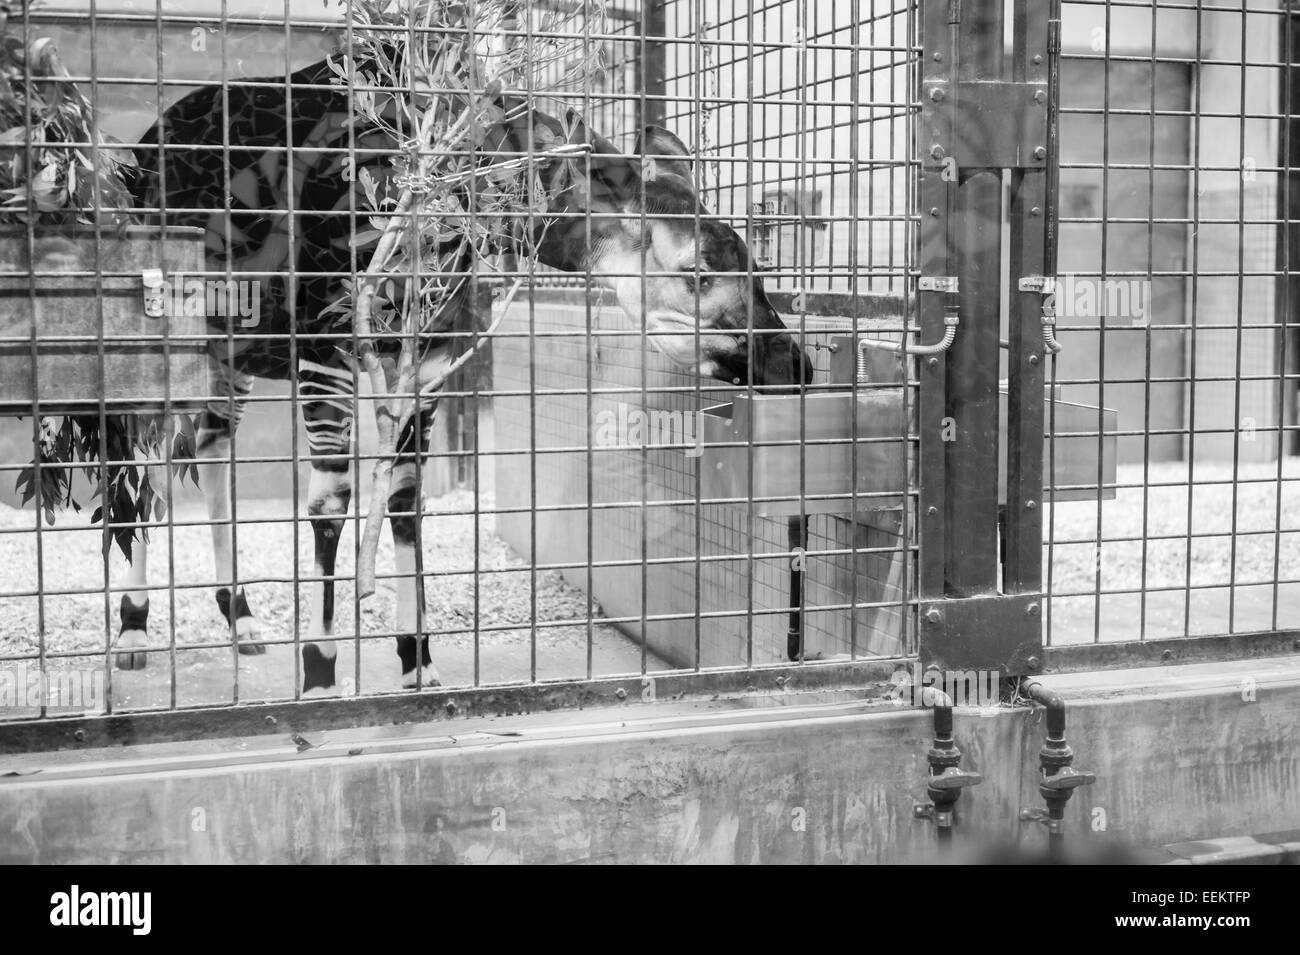 Okapi in eating in its winter indoor cage in Ueno Zoo, Japan Stock Photo